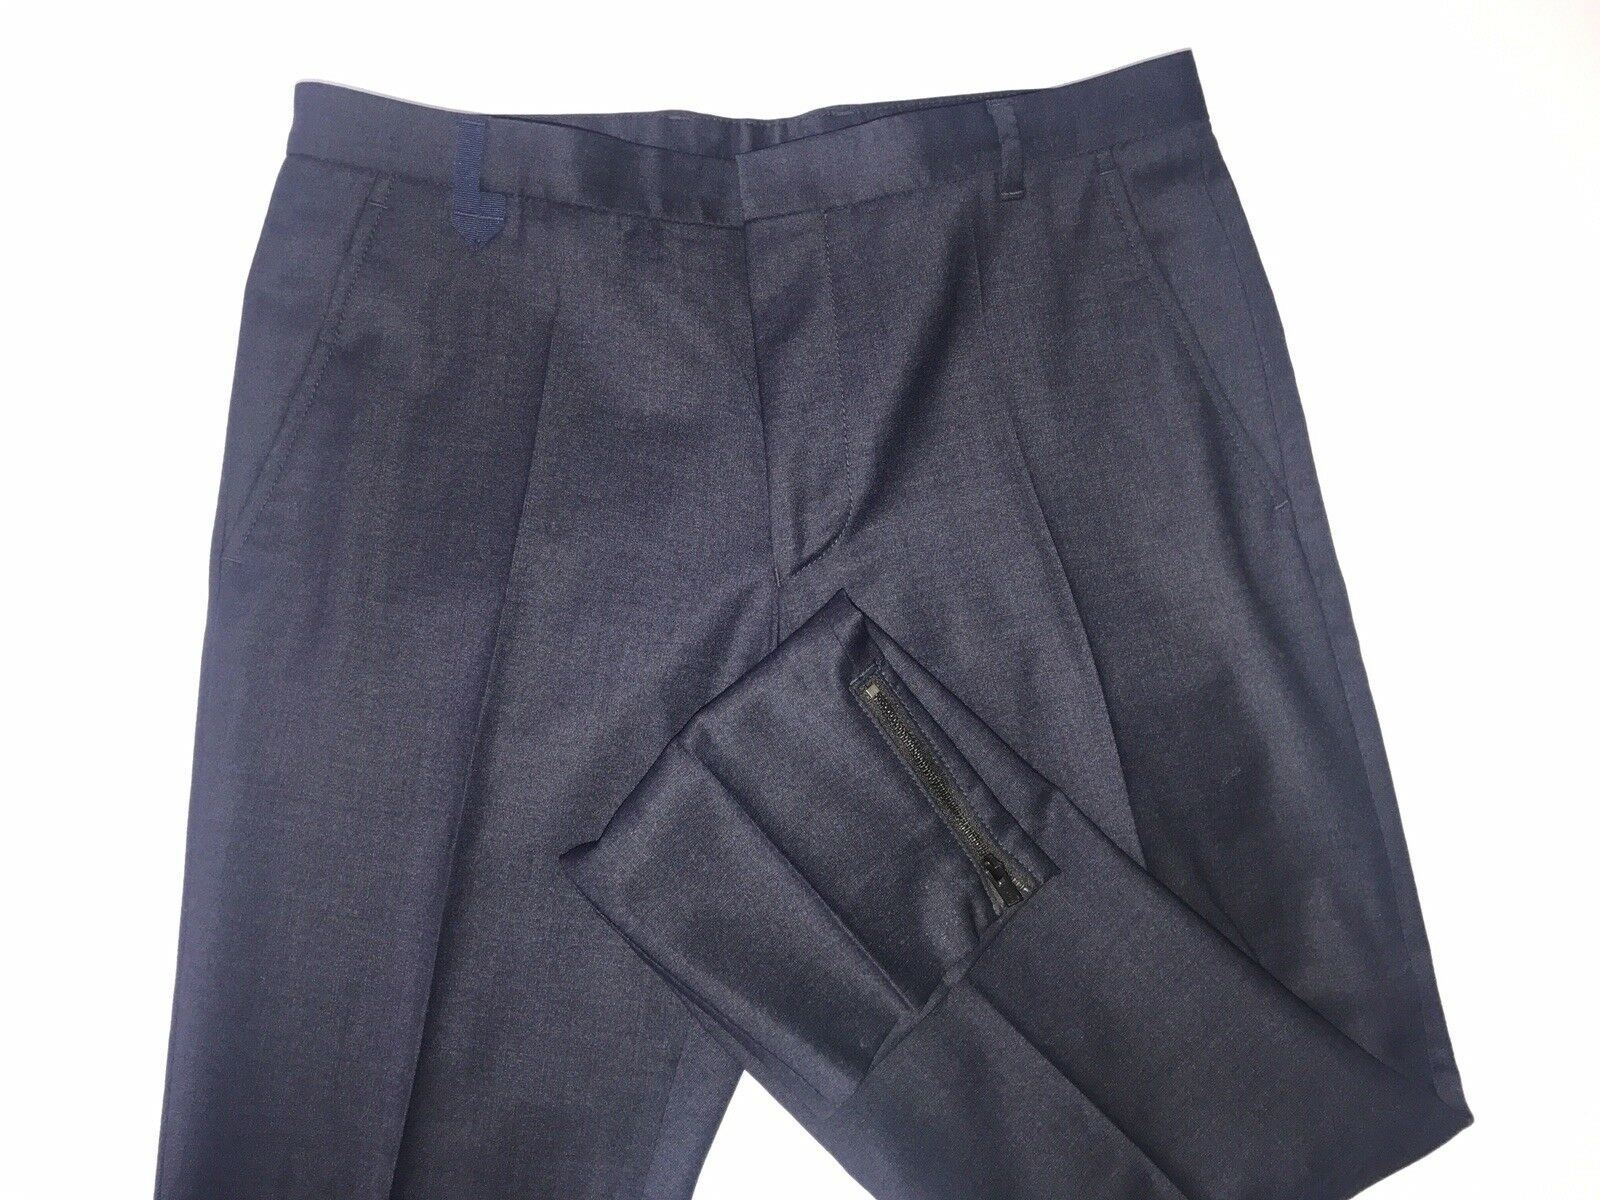 NWT $175 Boss Hugo Boss Hiw Mens Wool  Dark Blue Dress Pants Size 30R US